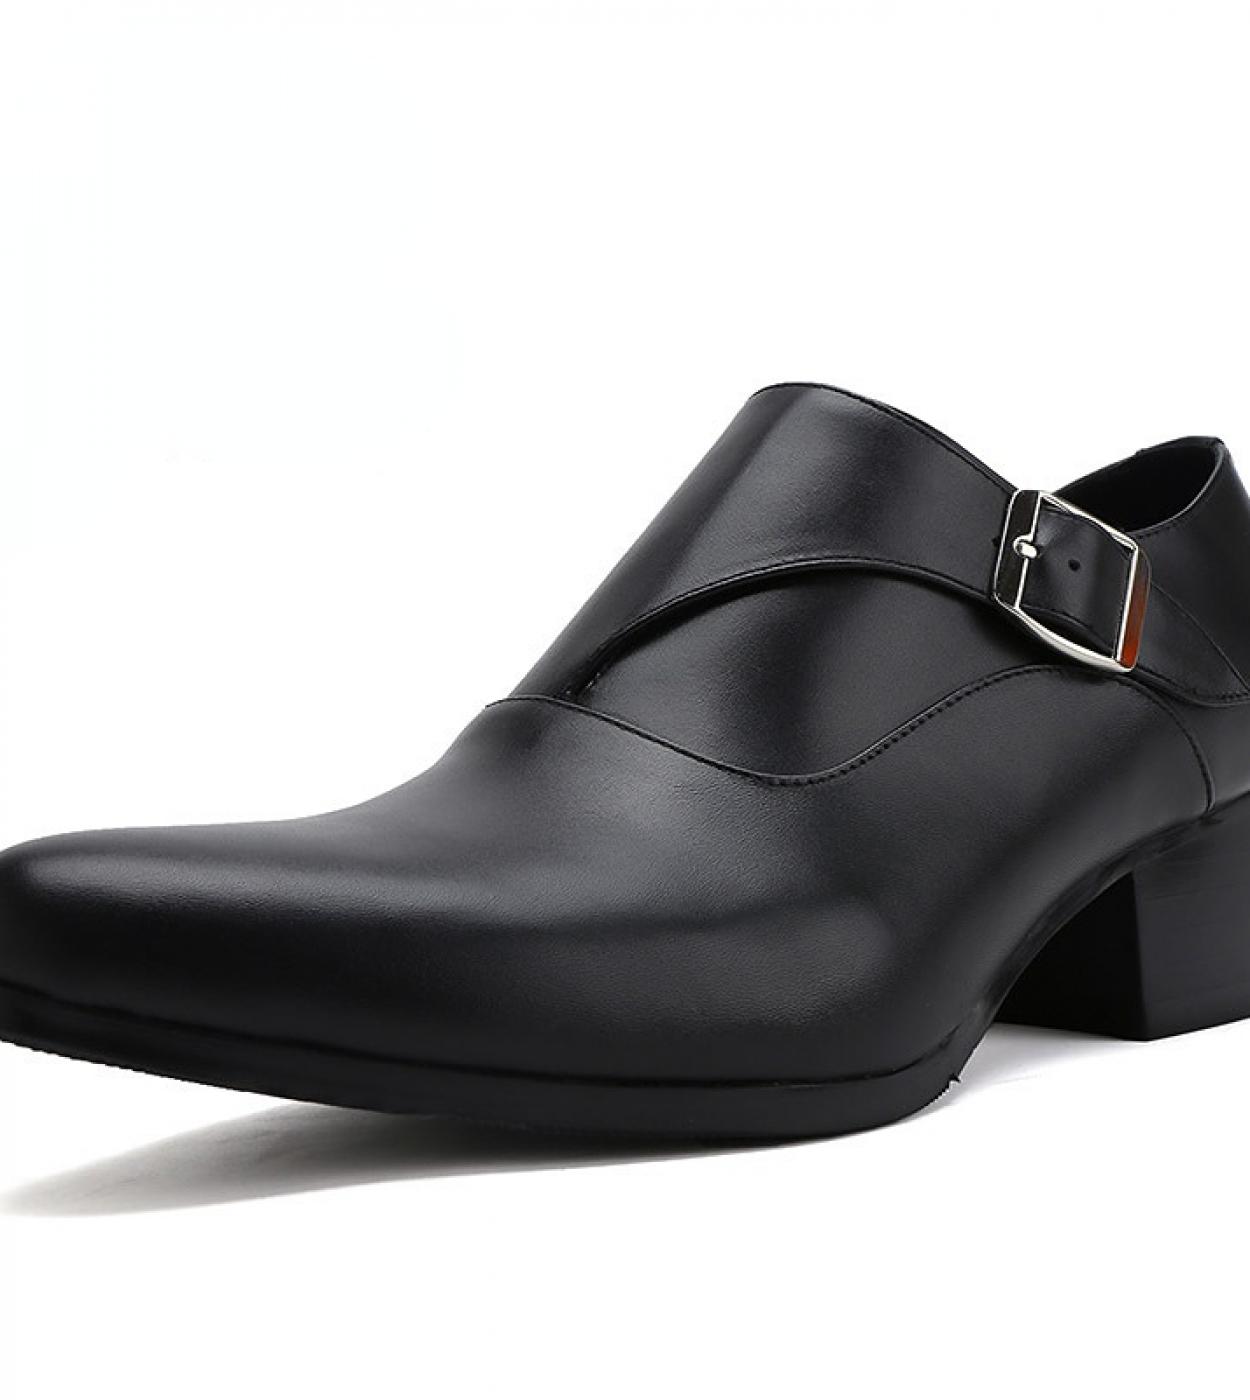 Attitudist Black High Heel Slip-on Moccasin Shoes For Men, Moccasin Mens  Shoes, Gents Moccasin Shoes, पुरुषों के मोकासिन से बने जूते - Marketing  King Online Private Limited, New Delhi | ID: 2850640102097